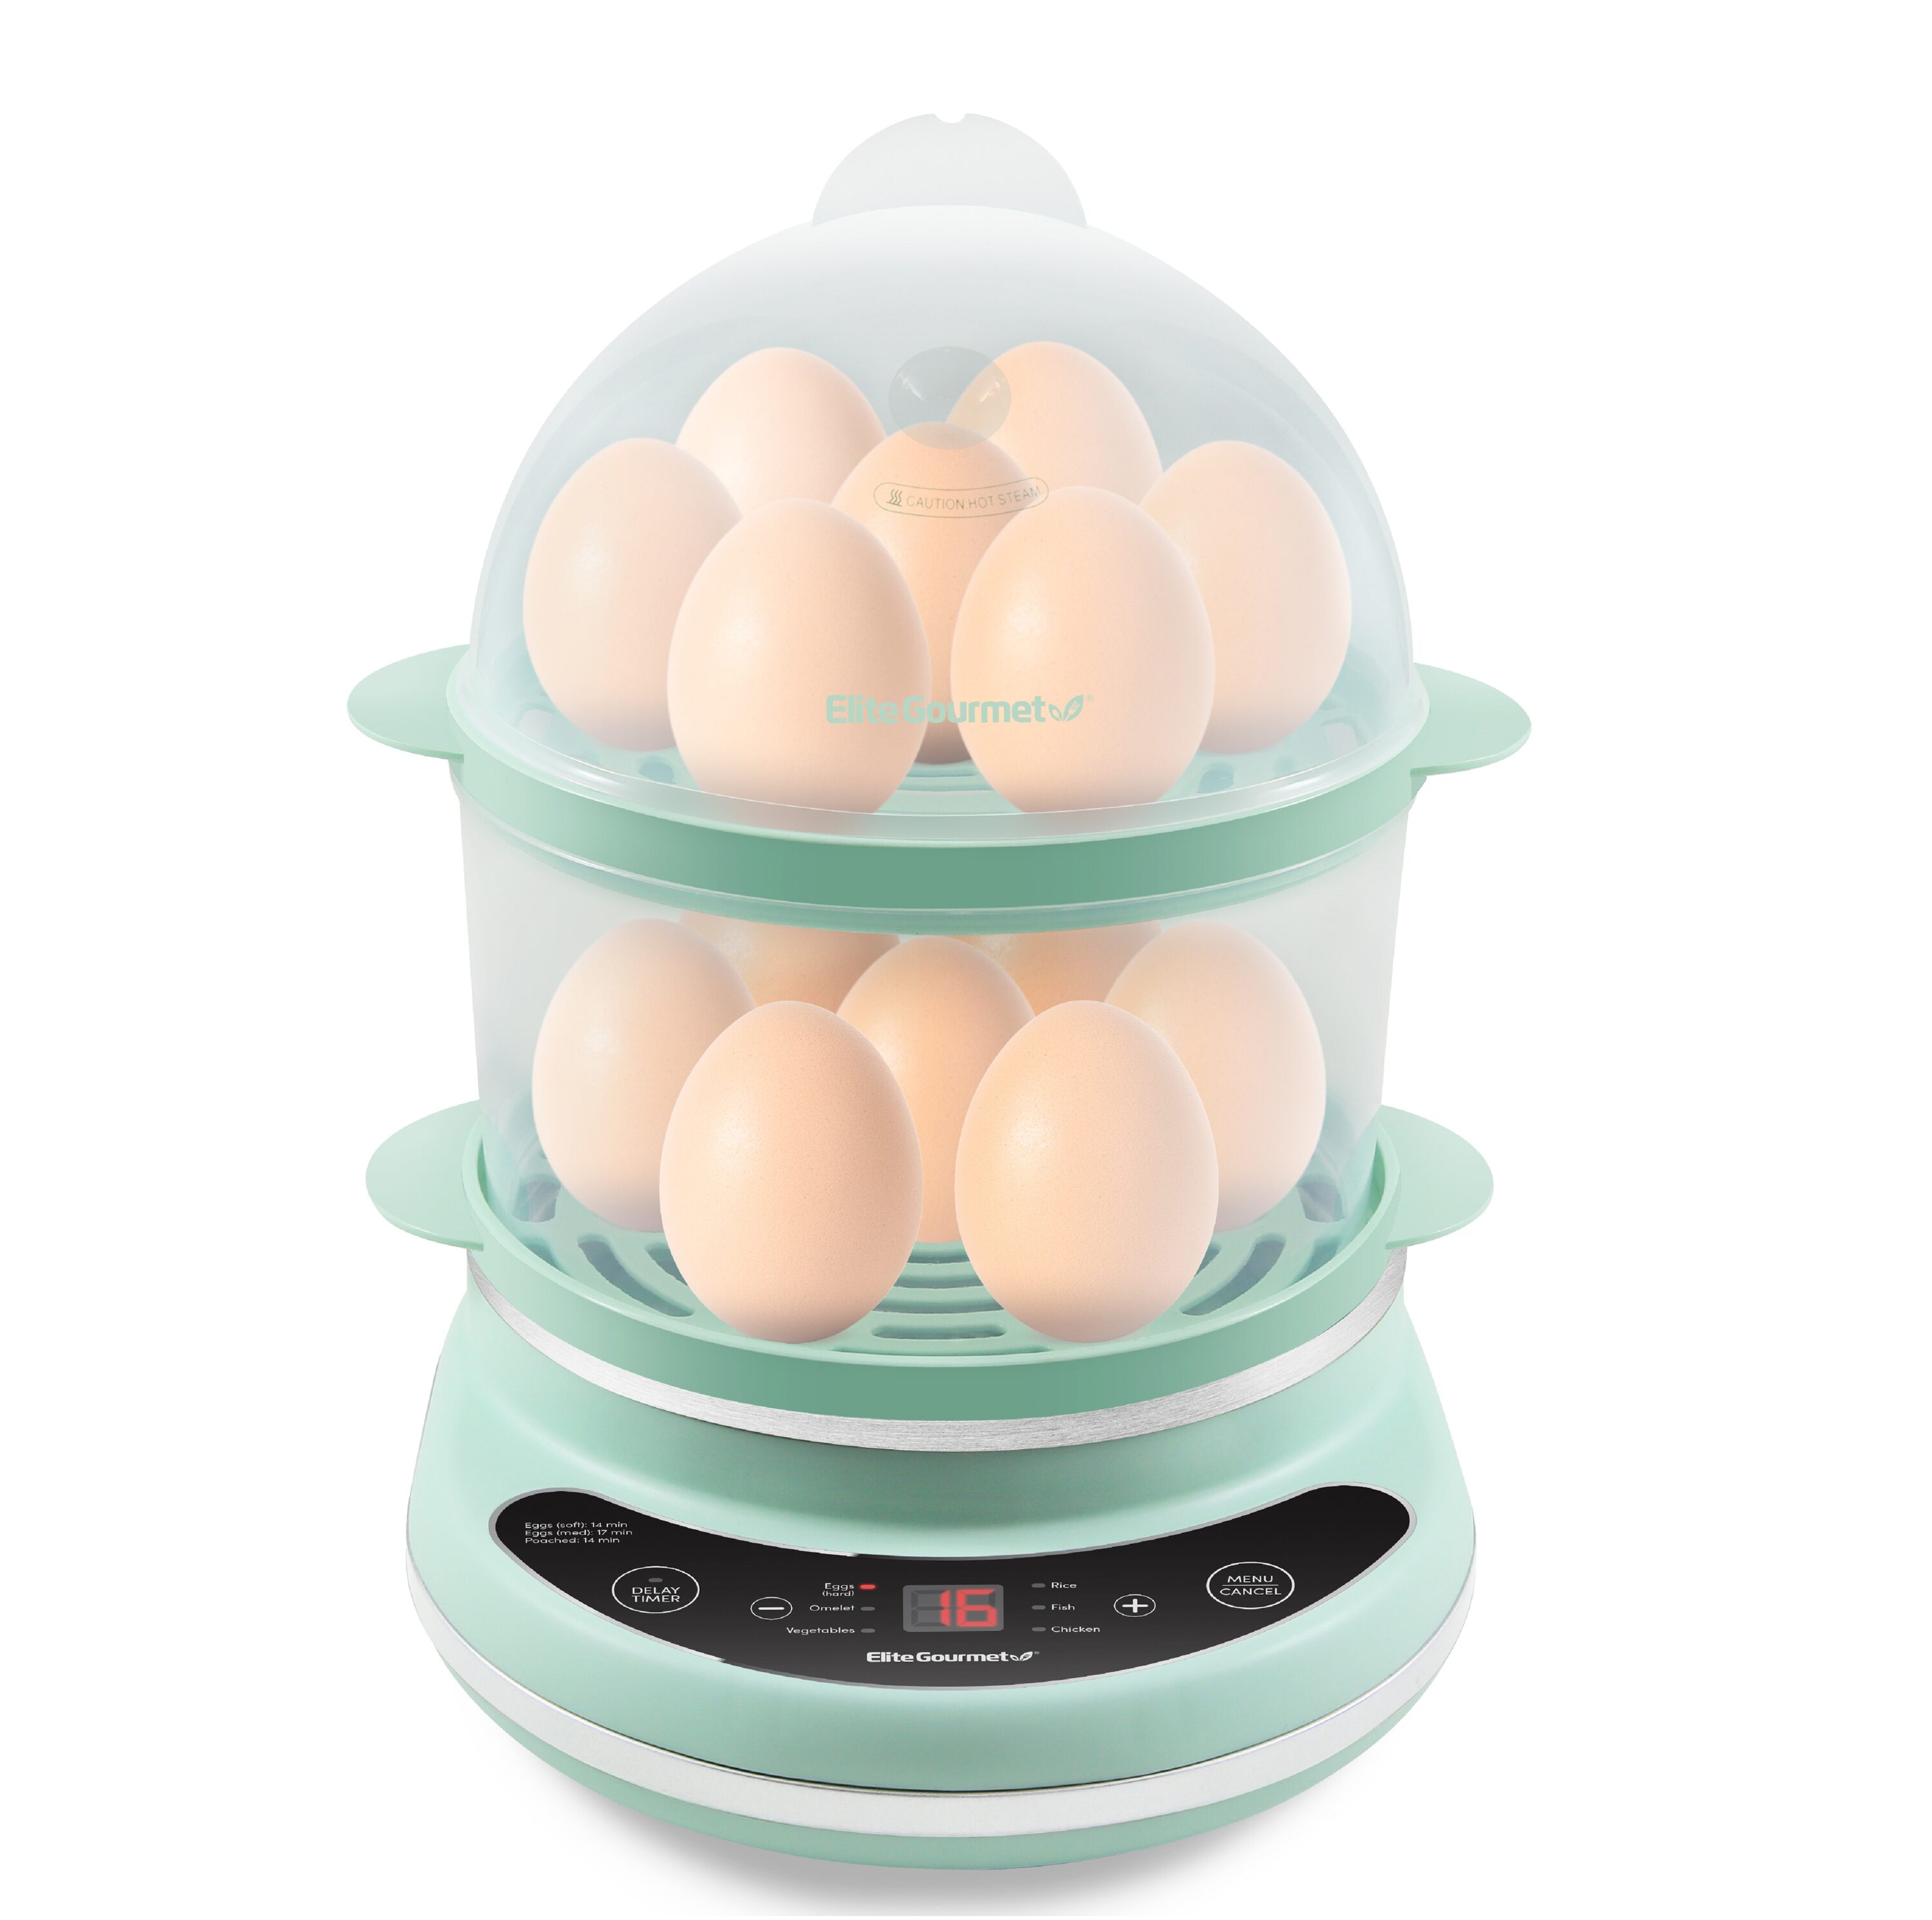 CHEFMAN Double Decker Egg Cooker User Guide